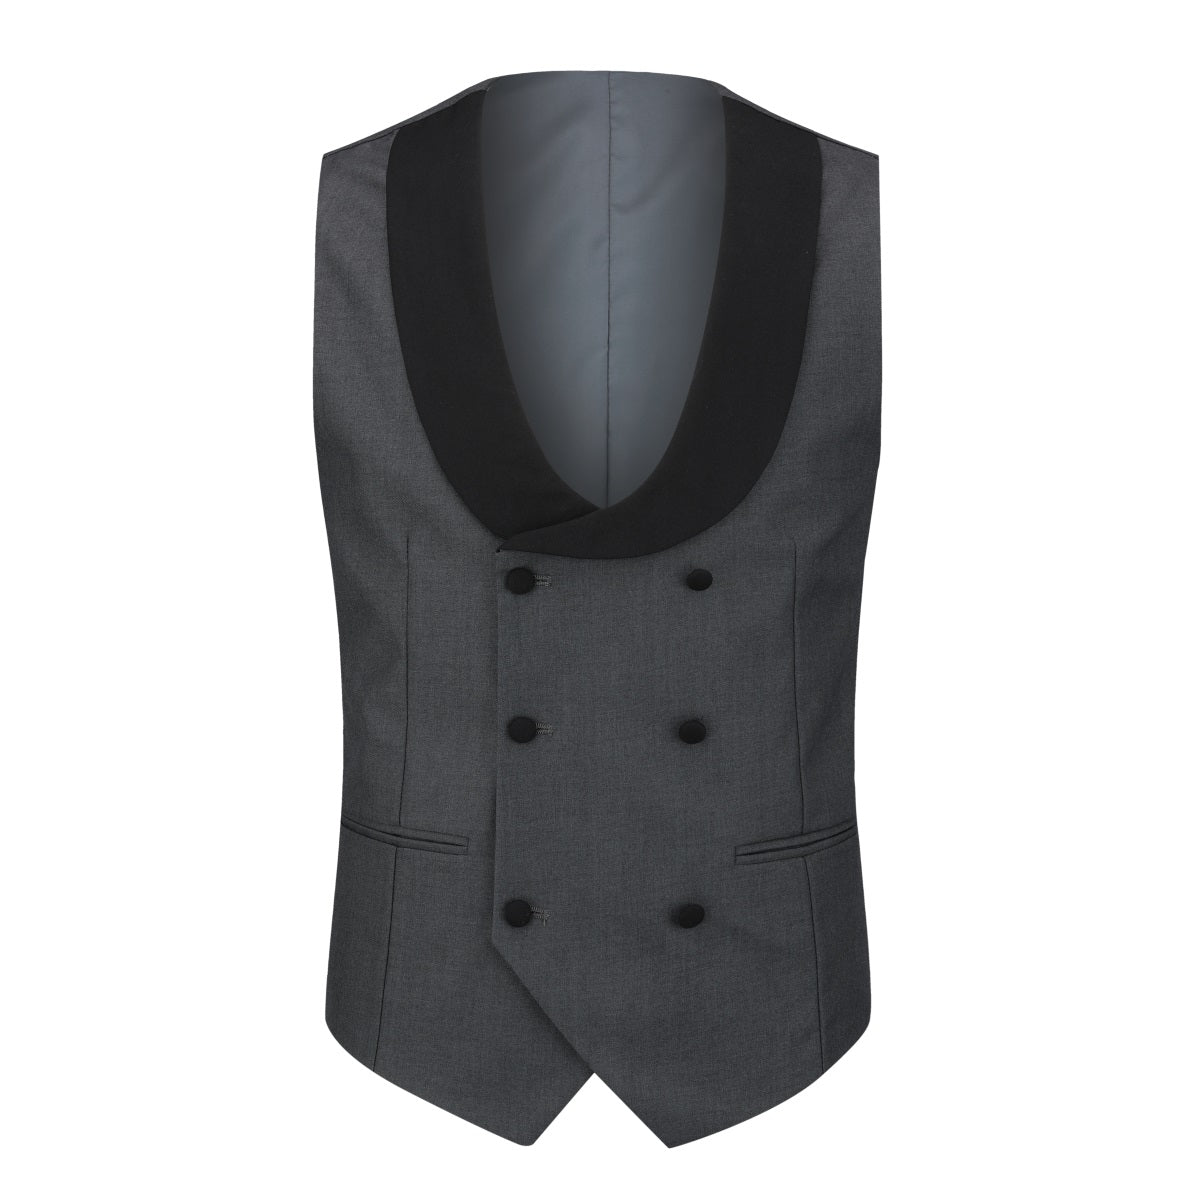 Grey 3-Piece Slim Fit Tuxedo - One Button, Peaked Lapel